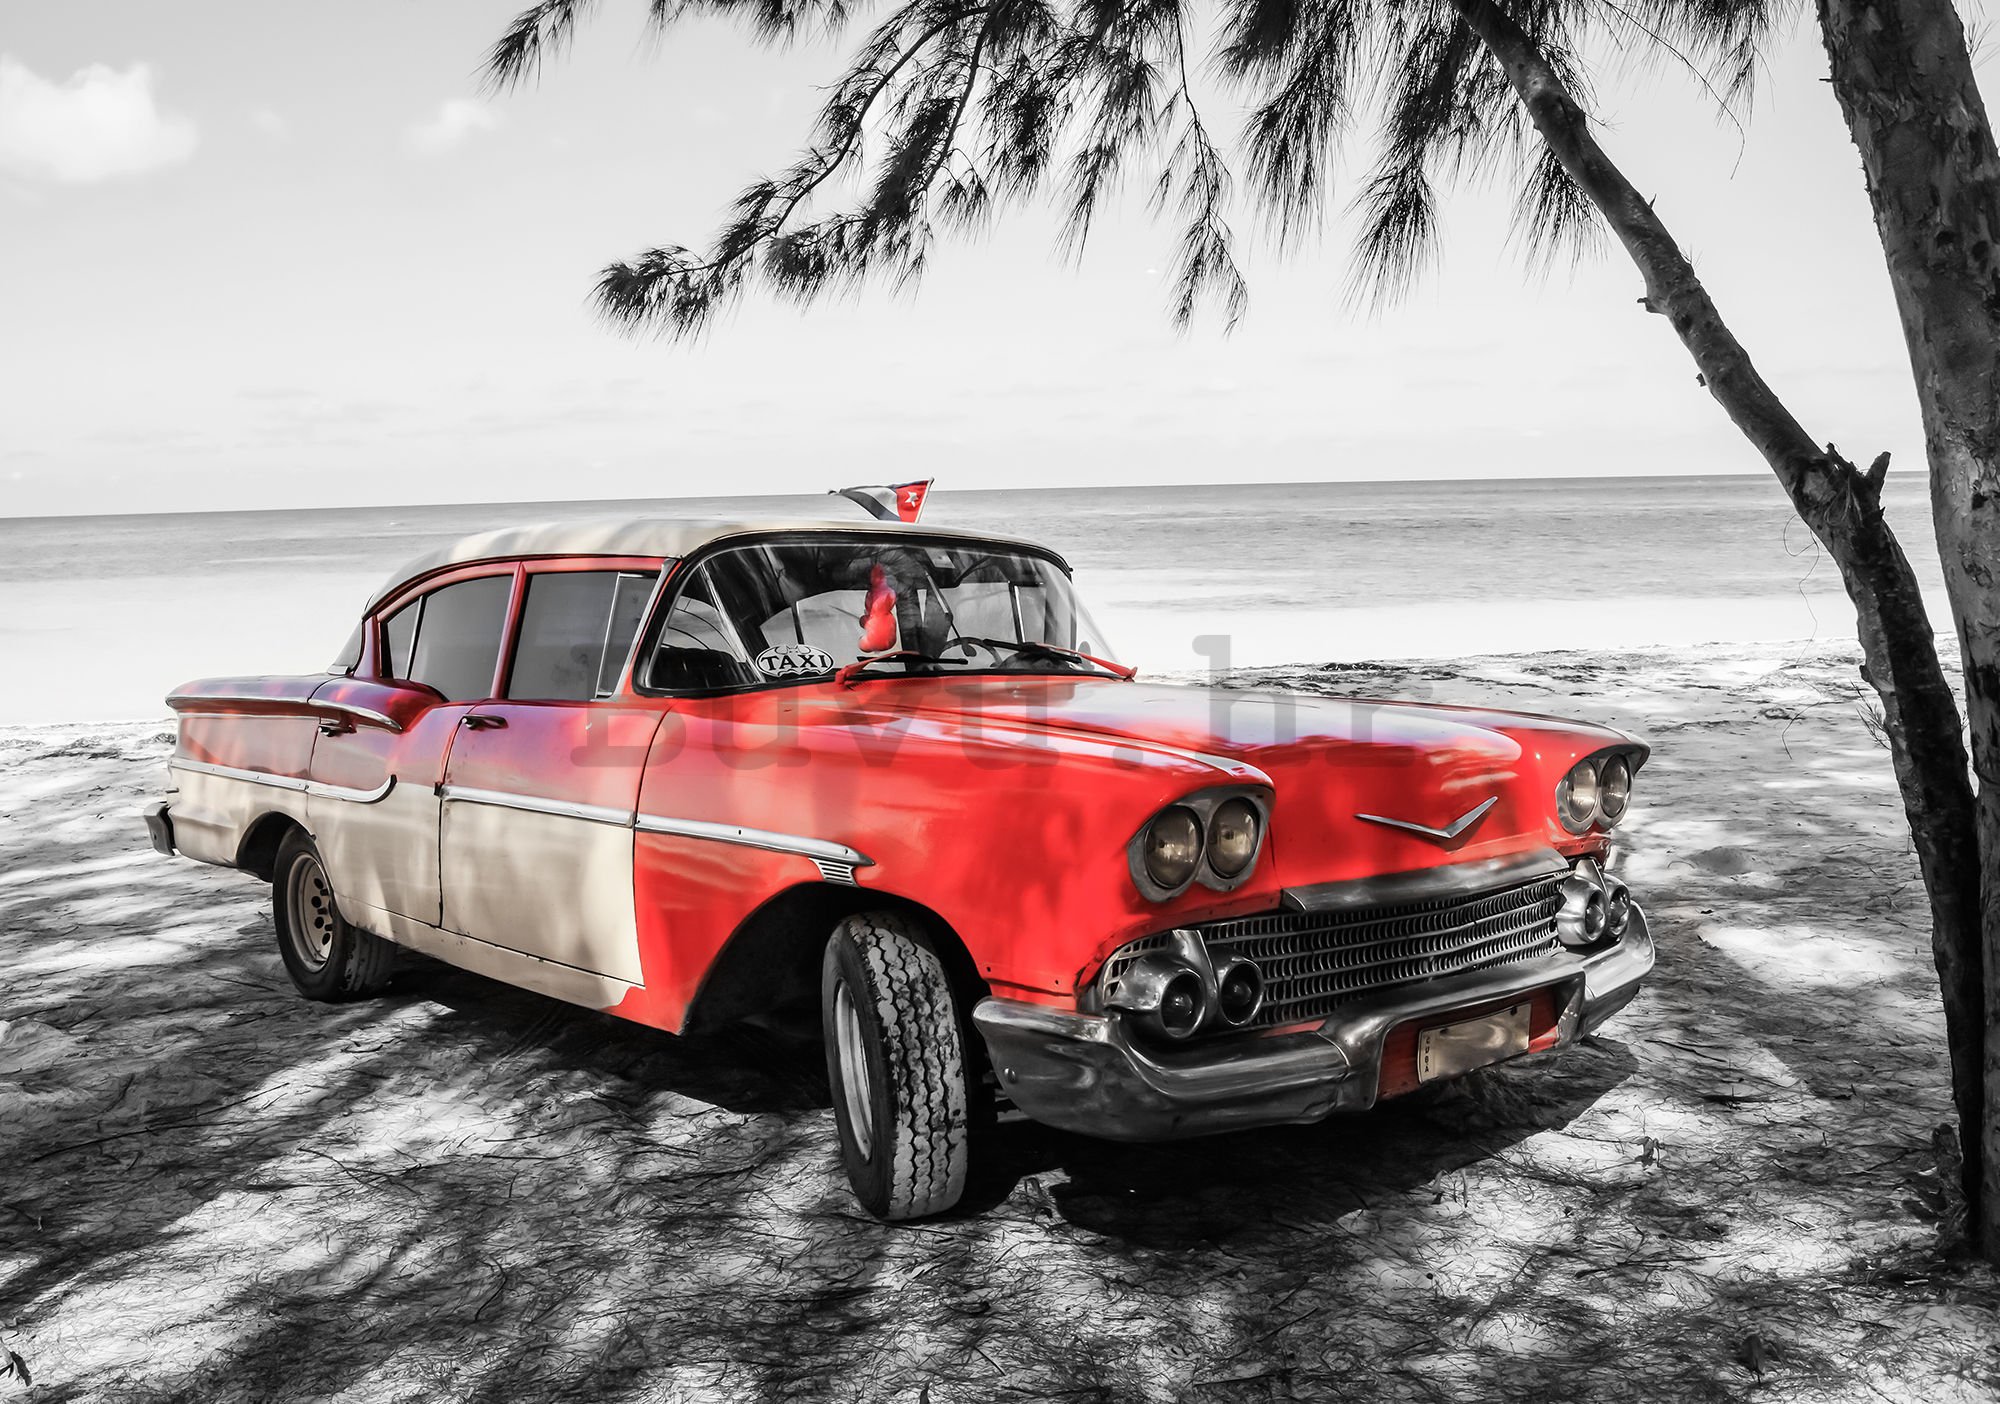 Foto tapeta: Kuba crveni automobil uz more - 254x368 cm